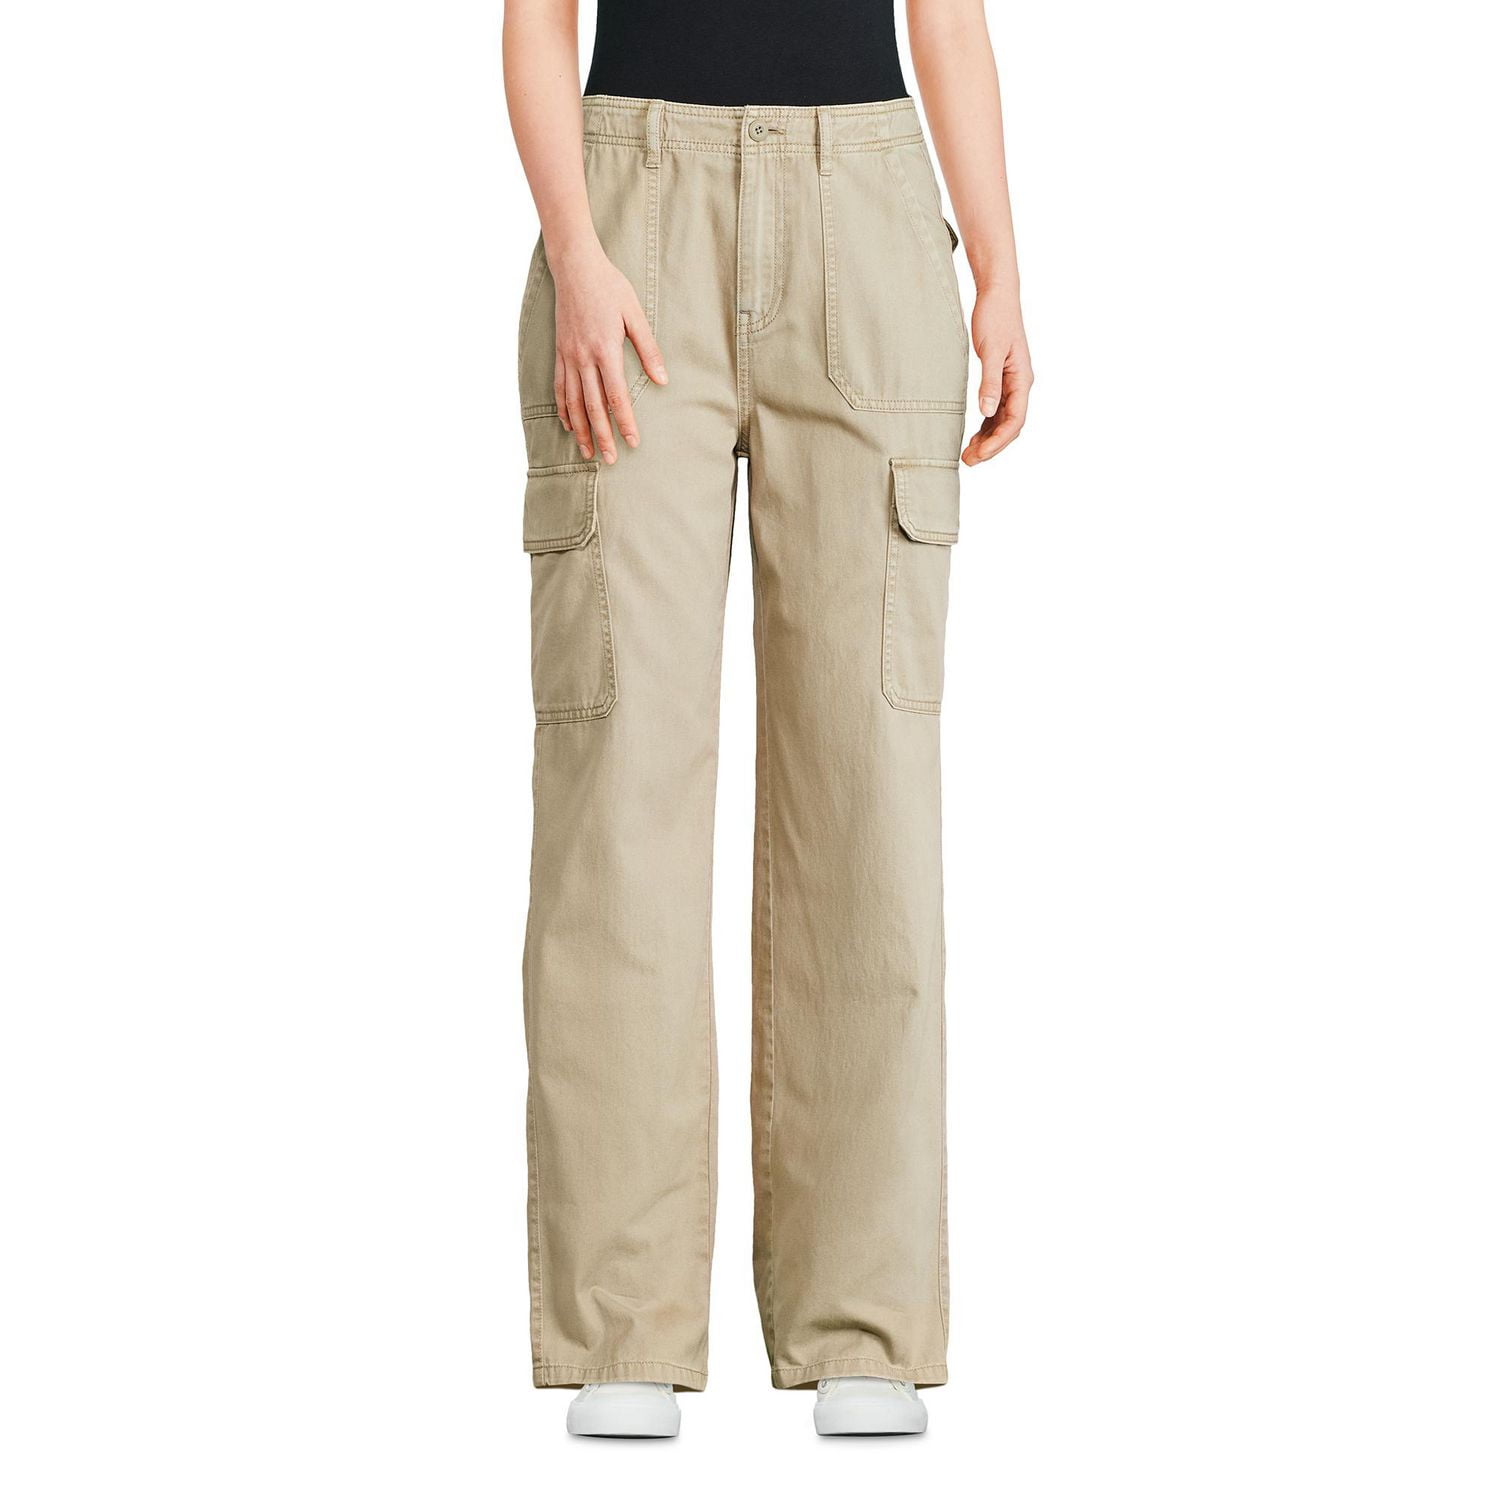 George Women Pants, Size 10P, Black, 58% Polyester, 39% Cotton, 3% Spandex